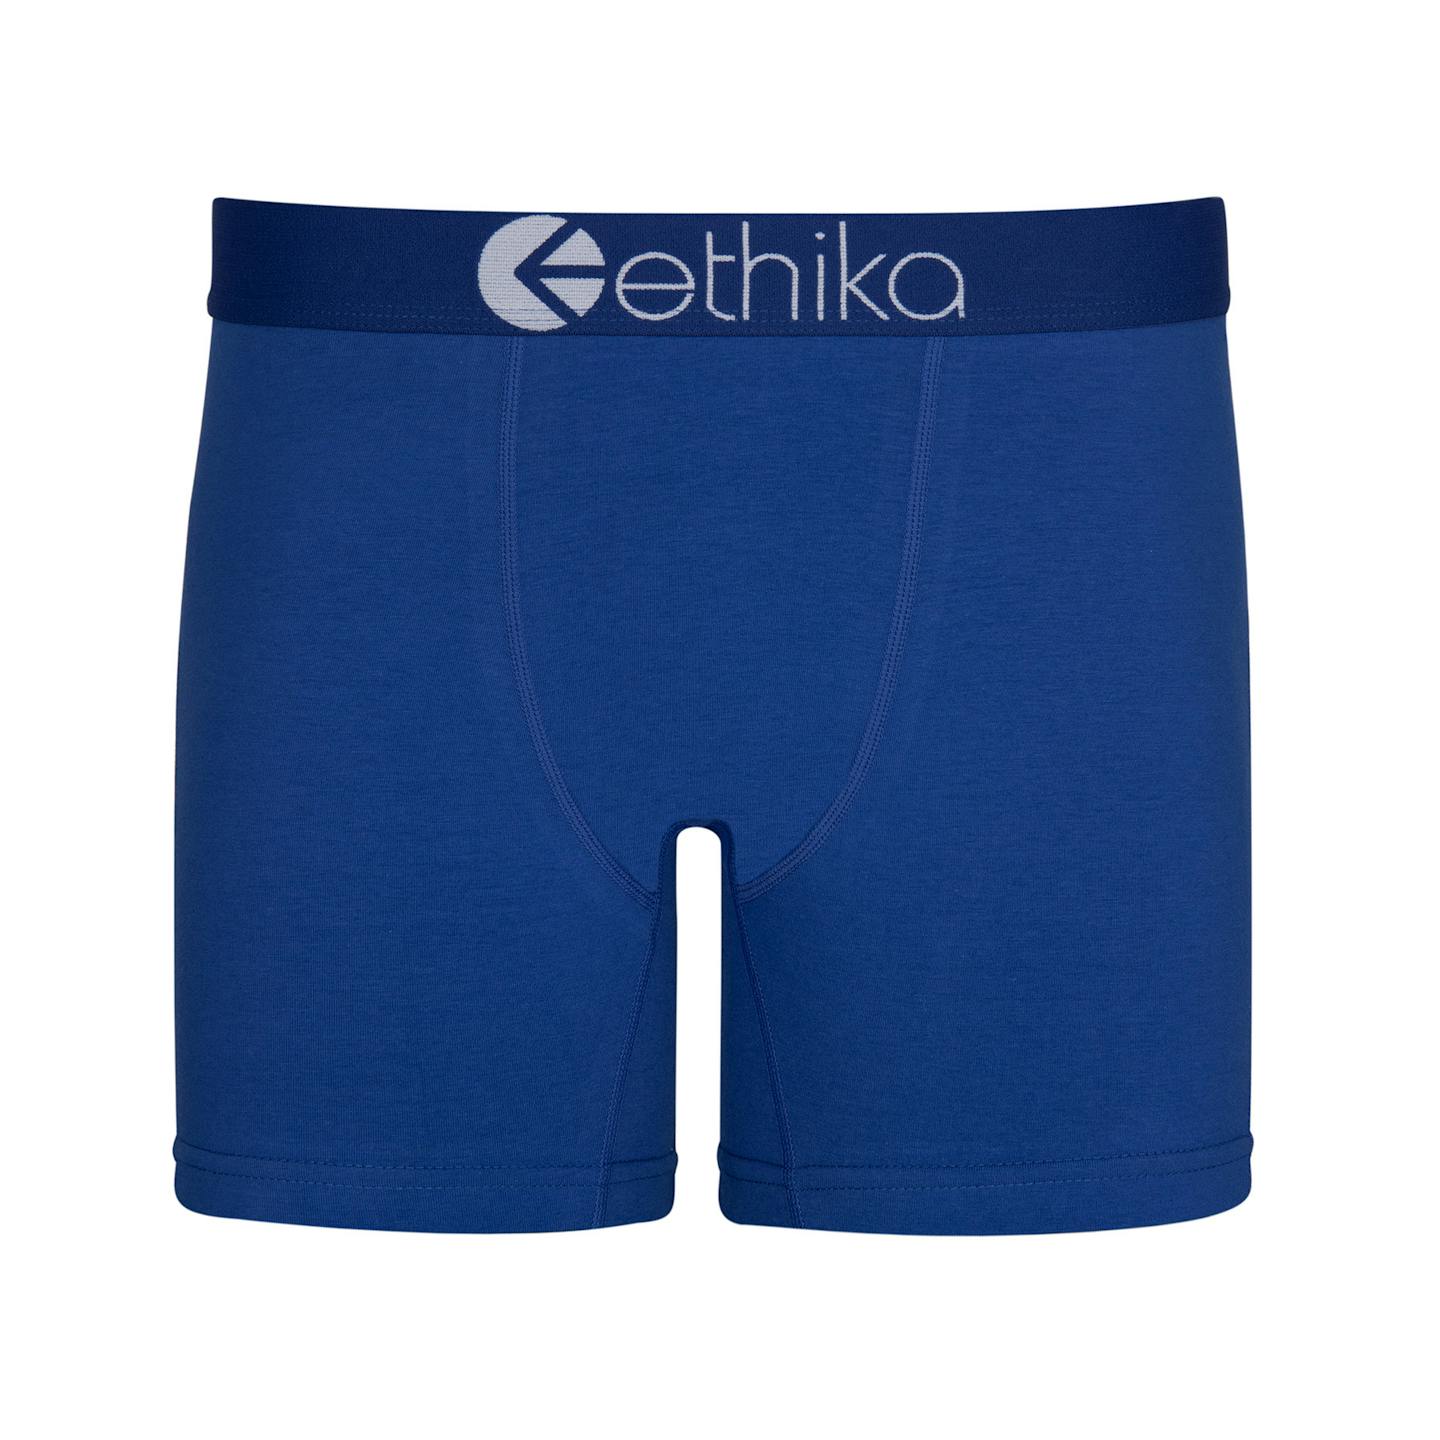 Underwear | Ethika | With You Everywhere